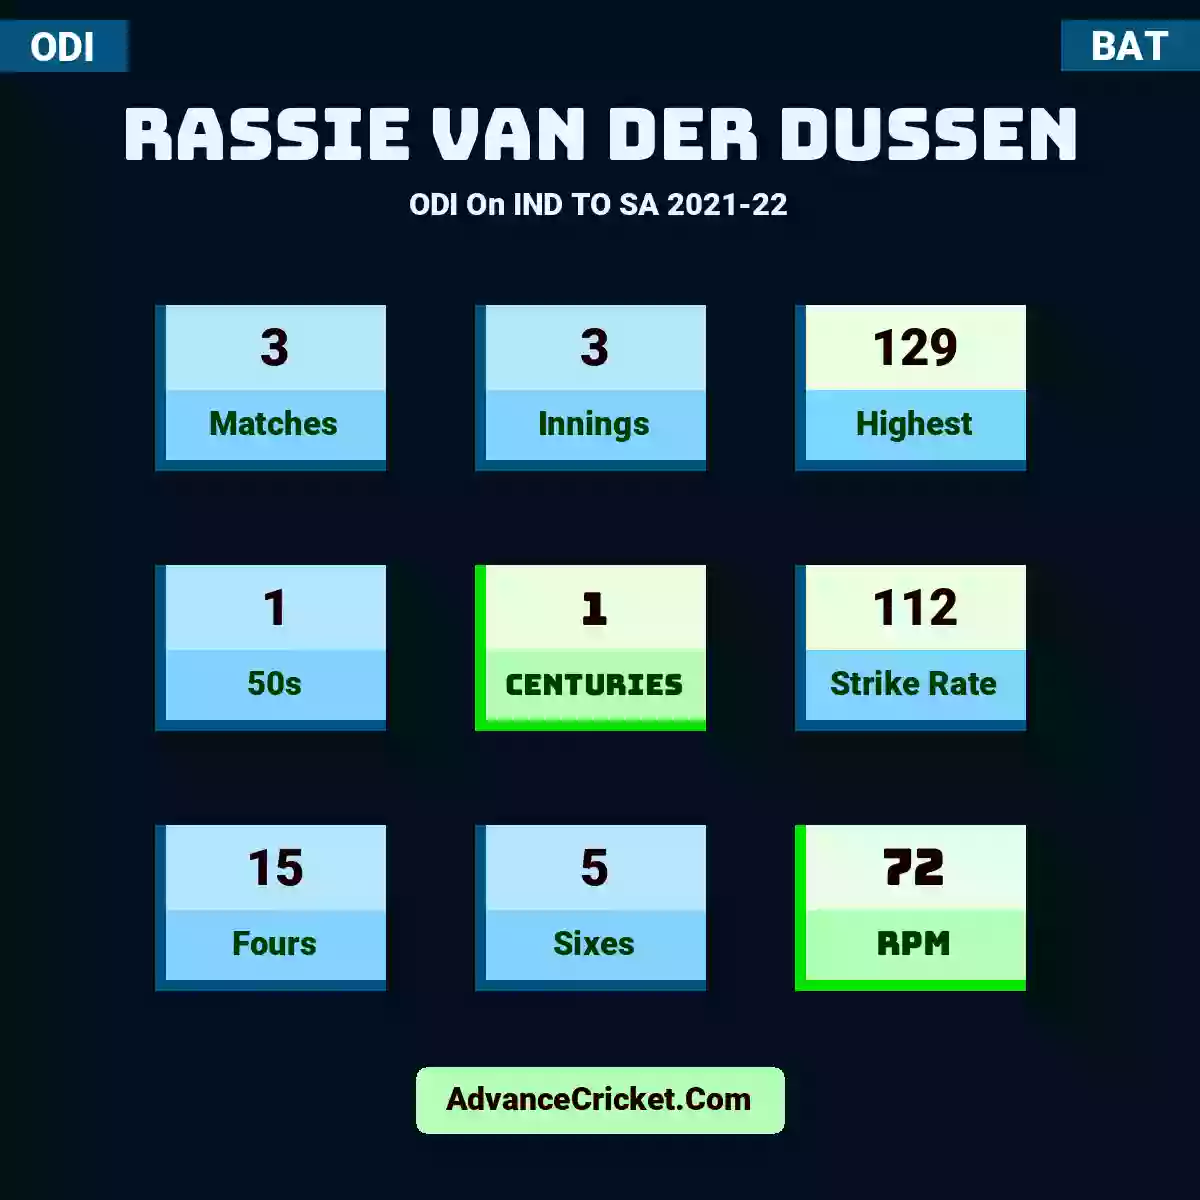 Rassie van der Dussen ODI  On IND TO SA 2021-22, Rassie van der Dussen played 3 matches, scored 129 runs as highest, 1 half-centuries, and 1 centuries, with a strike rate of 112. R.Dussen hit 15 fours and 5 sixes, with an RPM of 72.